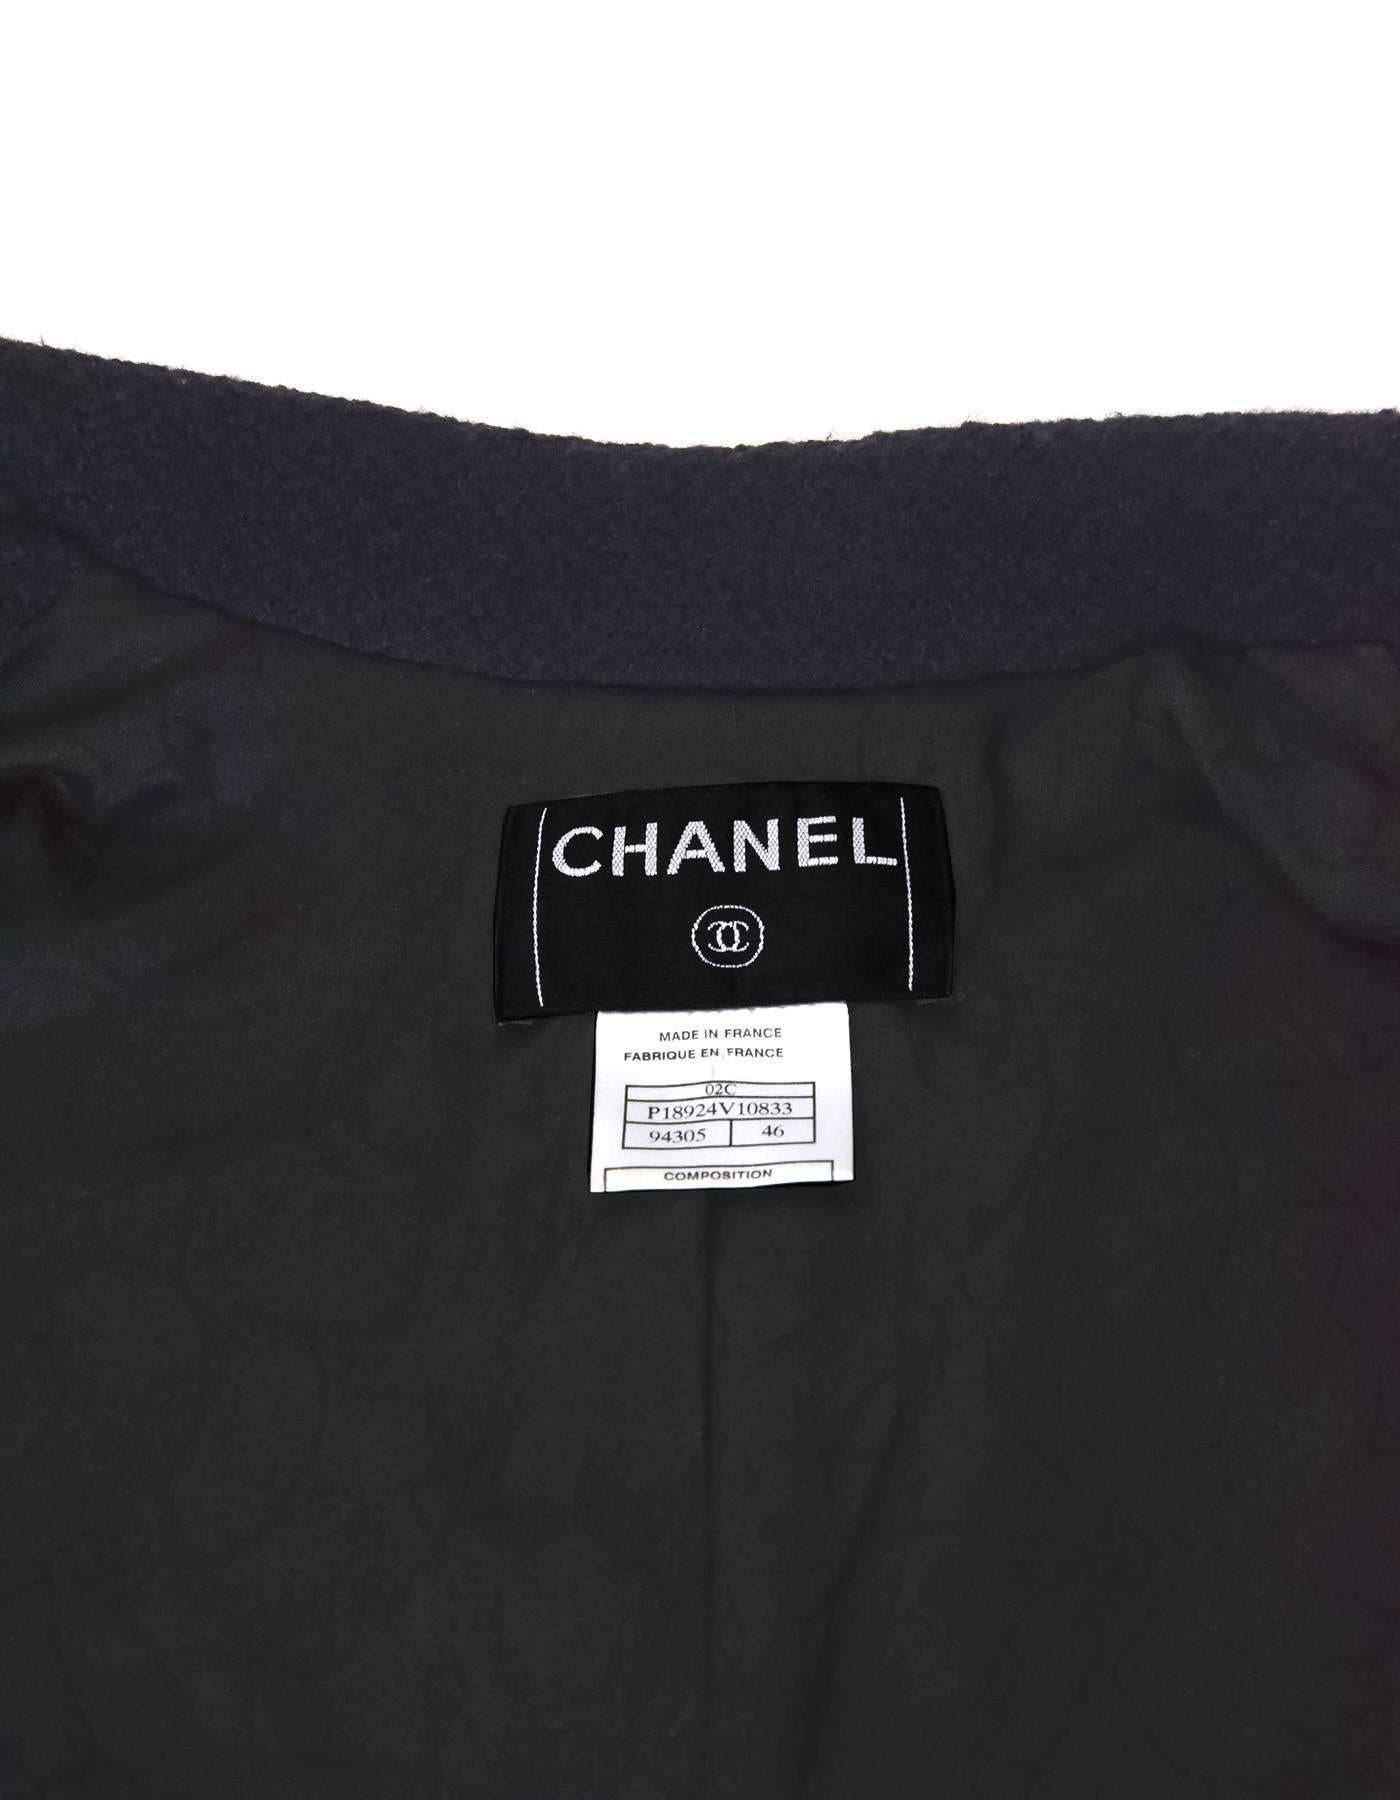 Chanel Black Boucle Jacket sz FR46 4